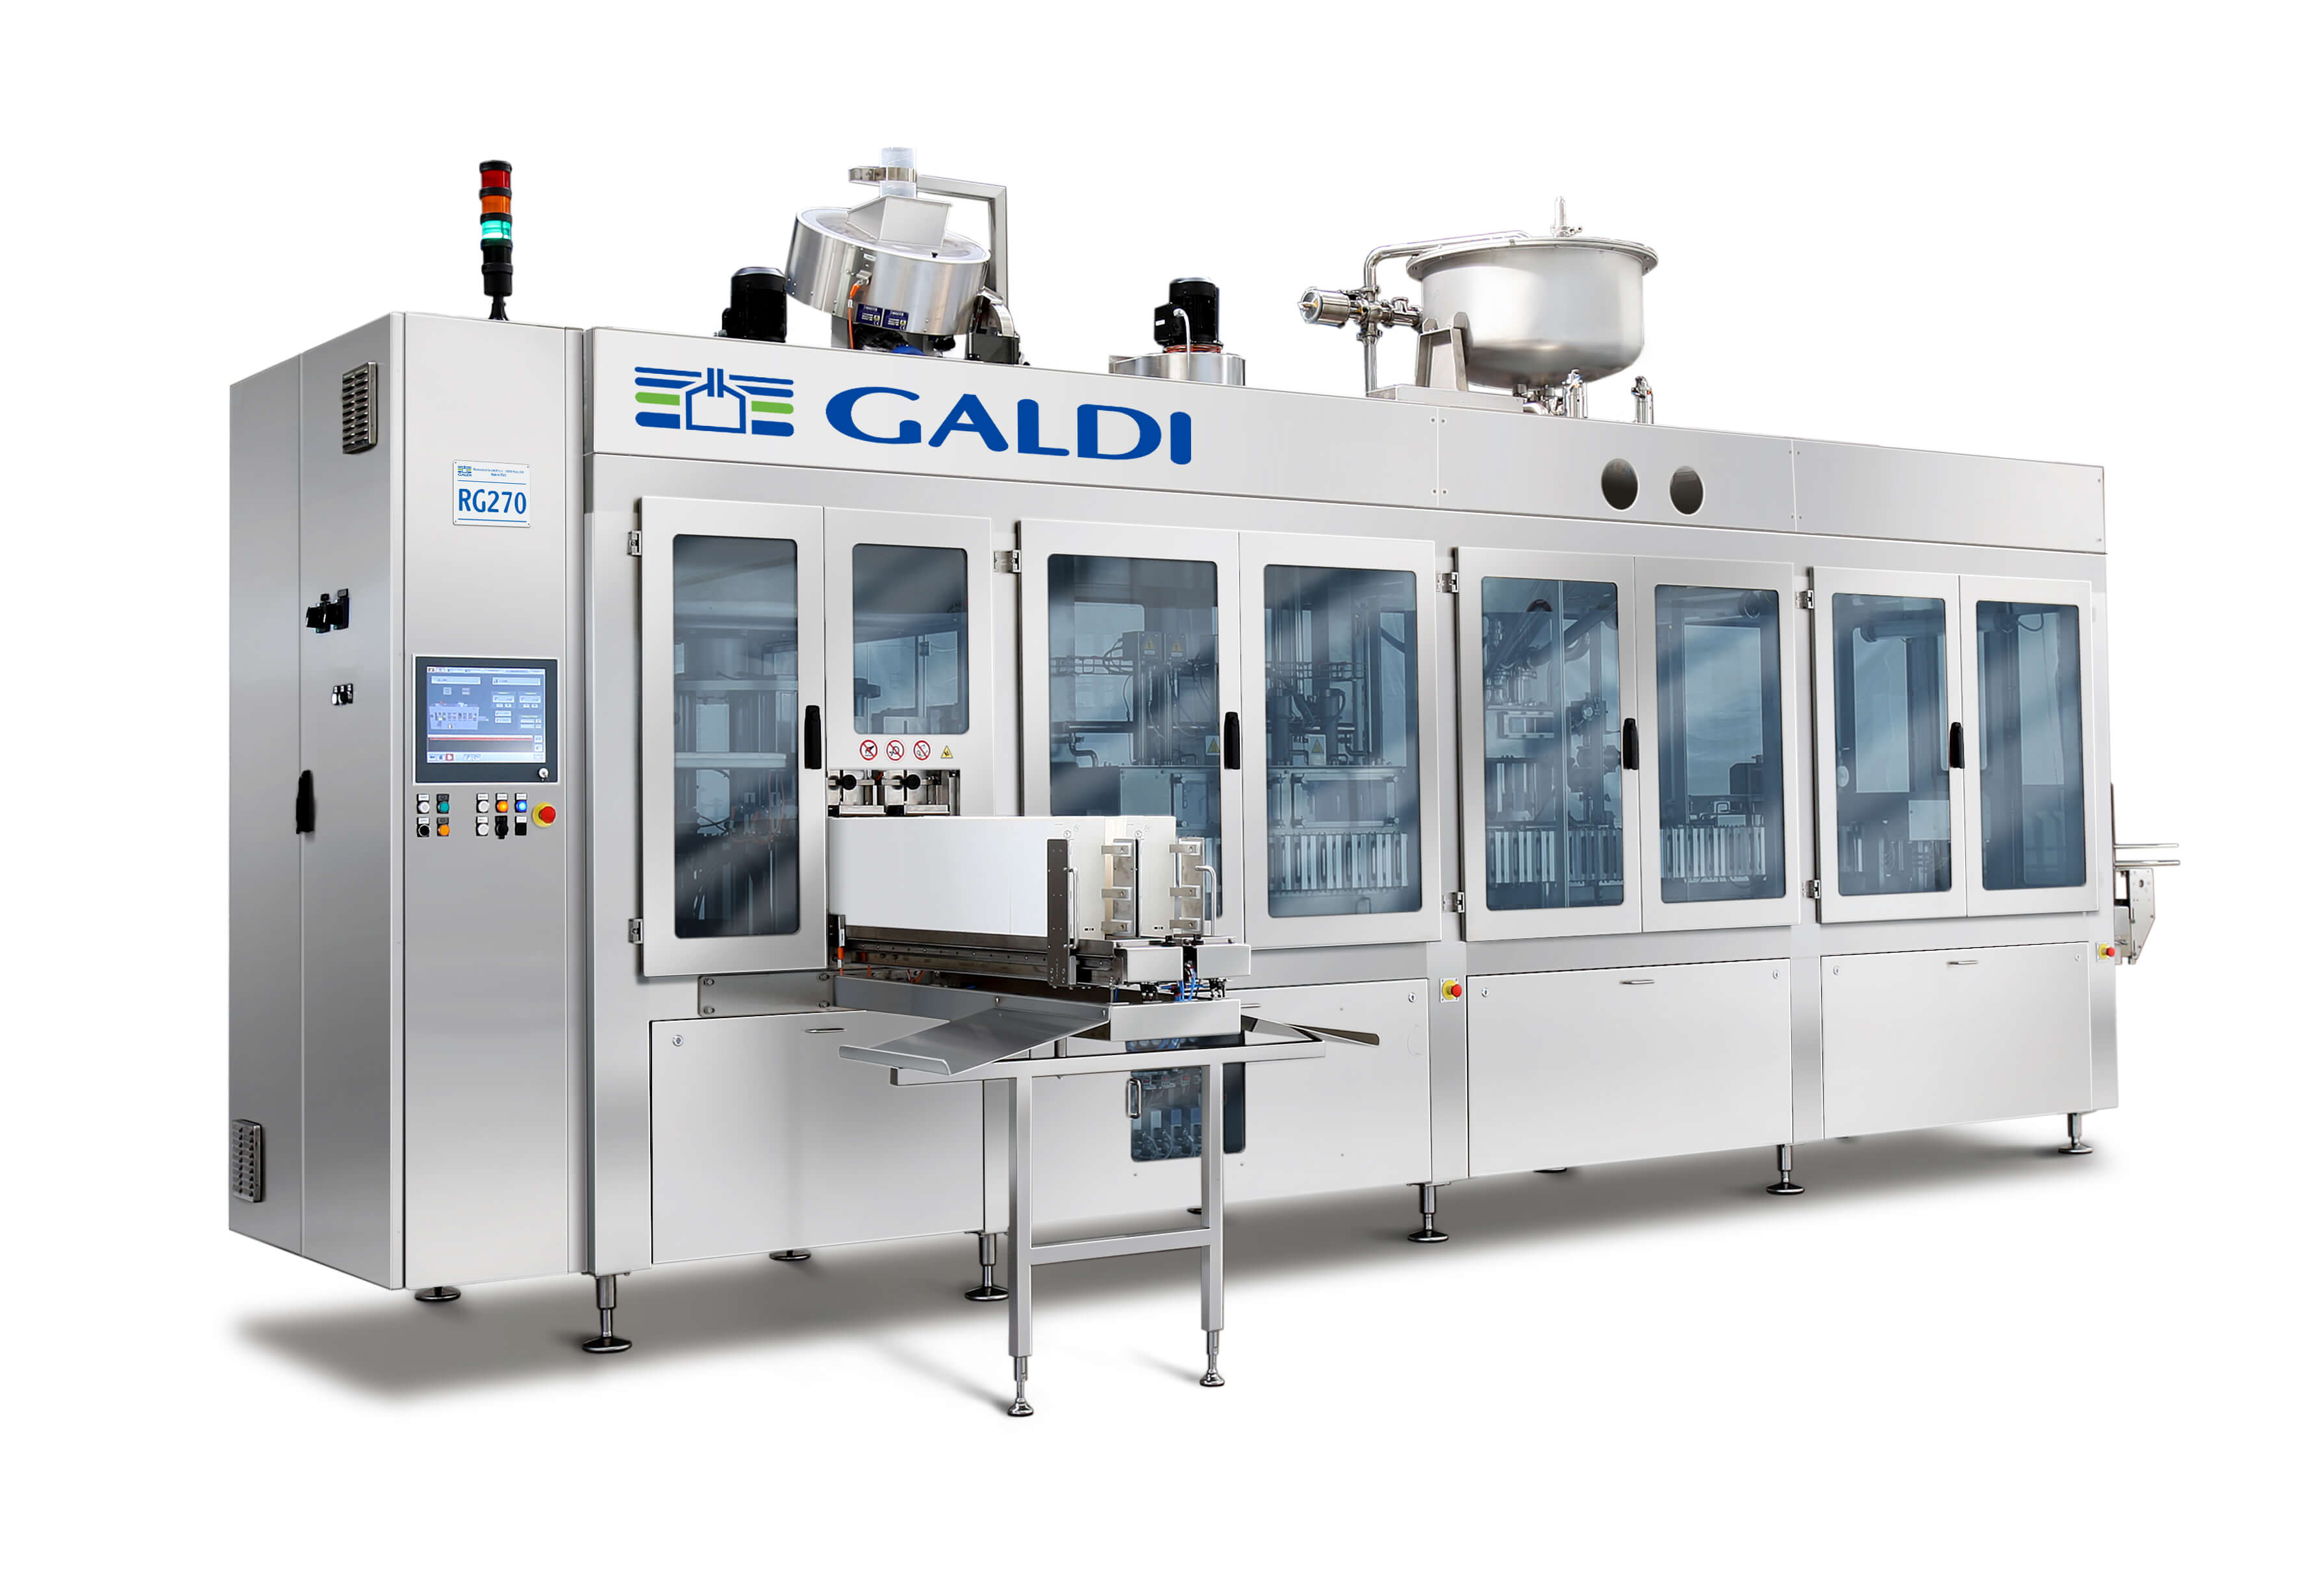 Galdi Machine series RG270